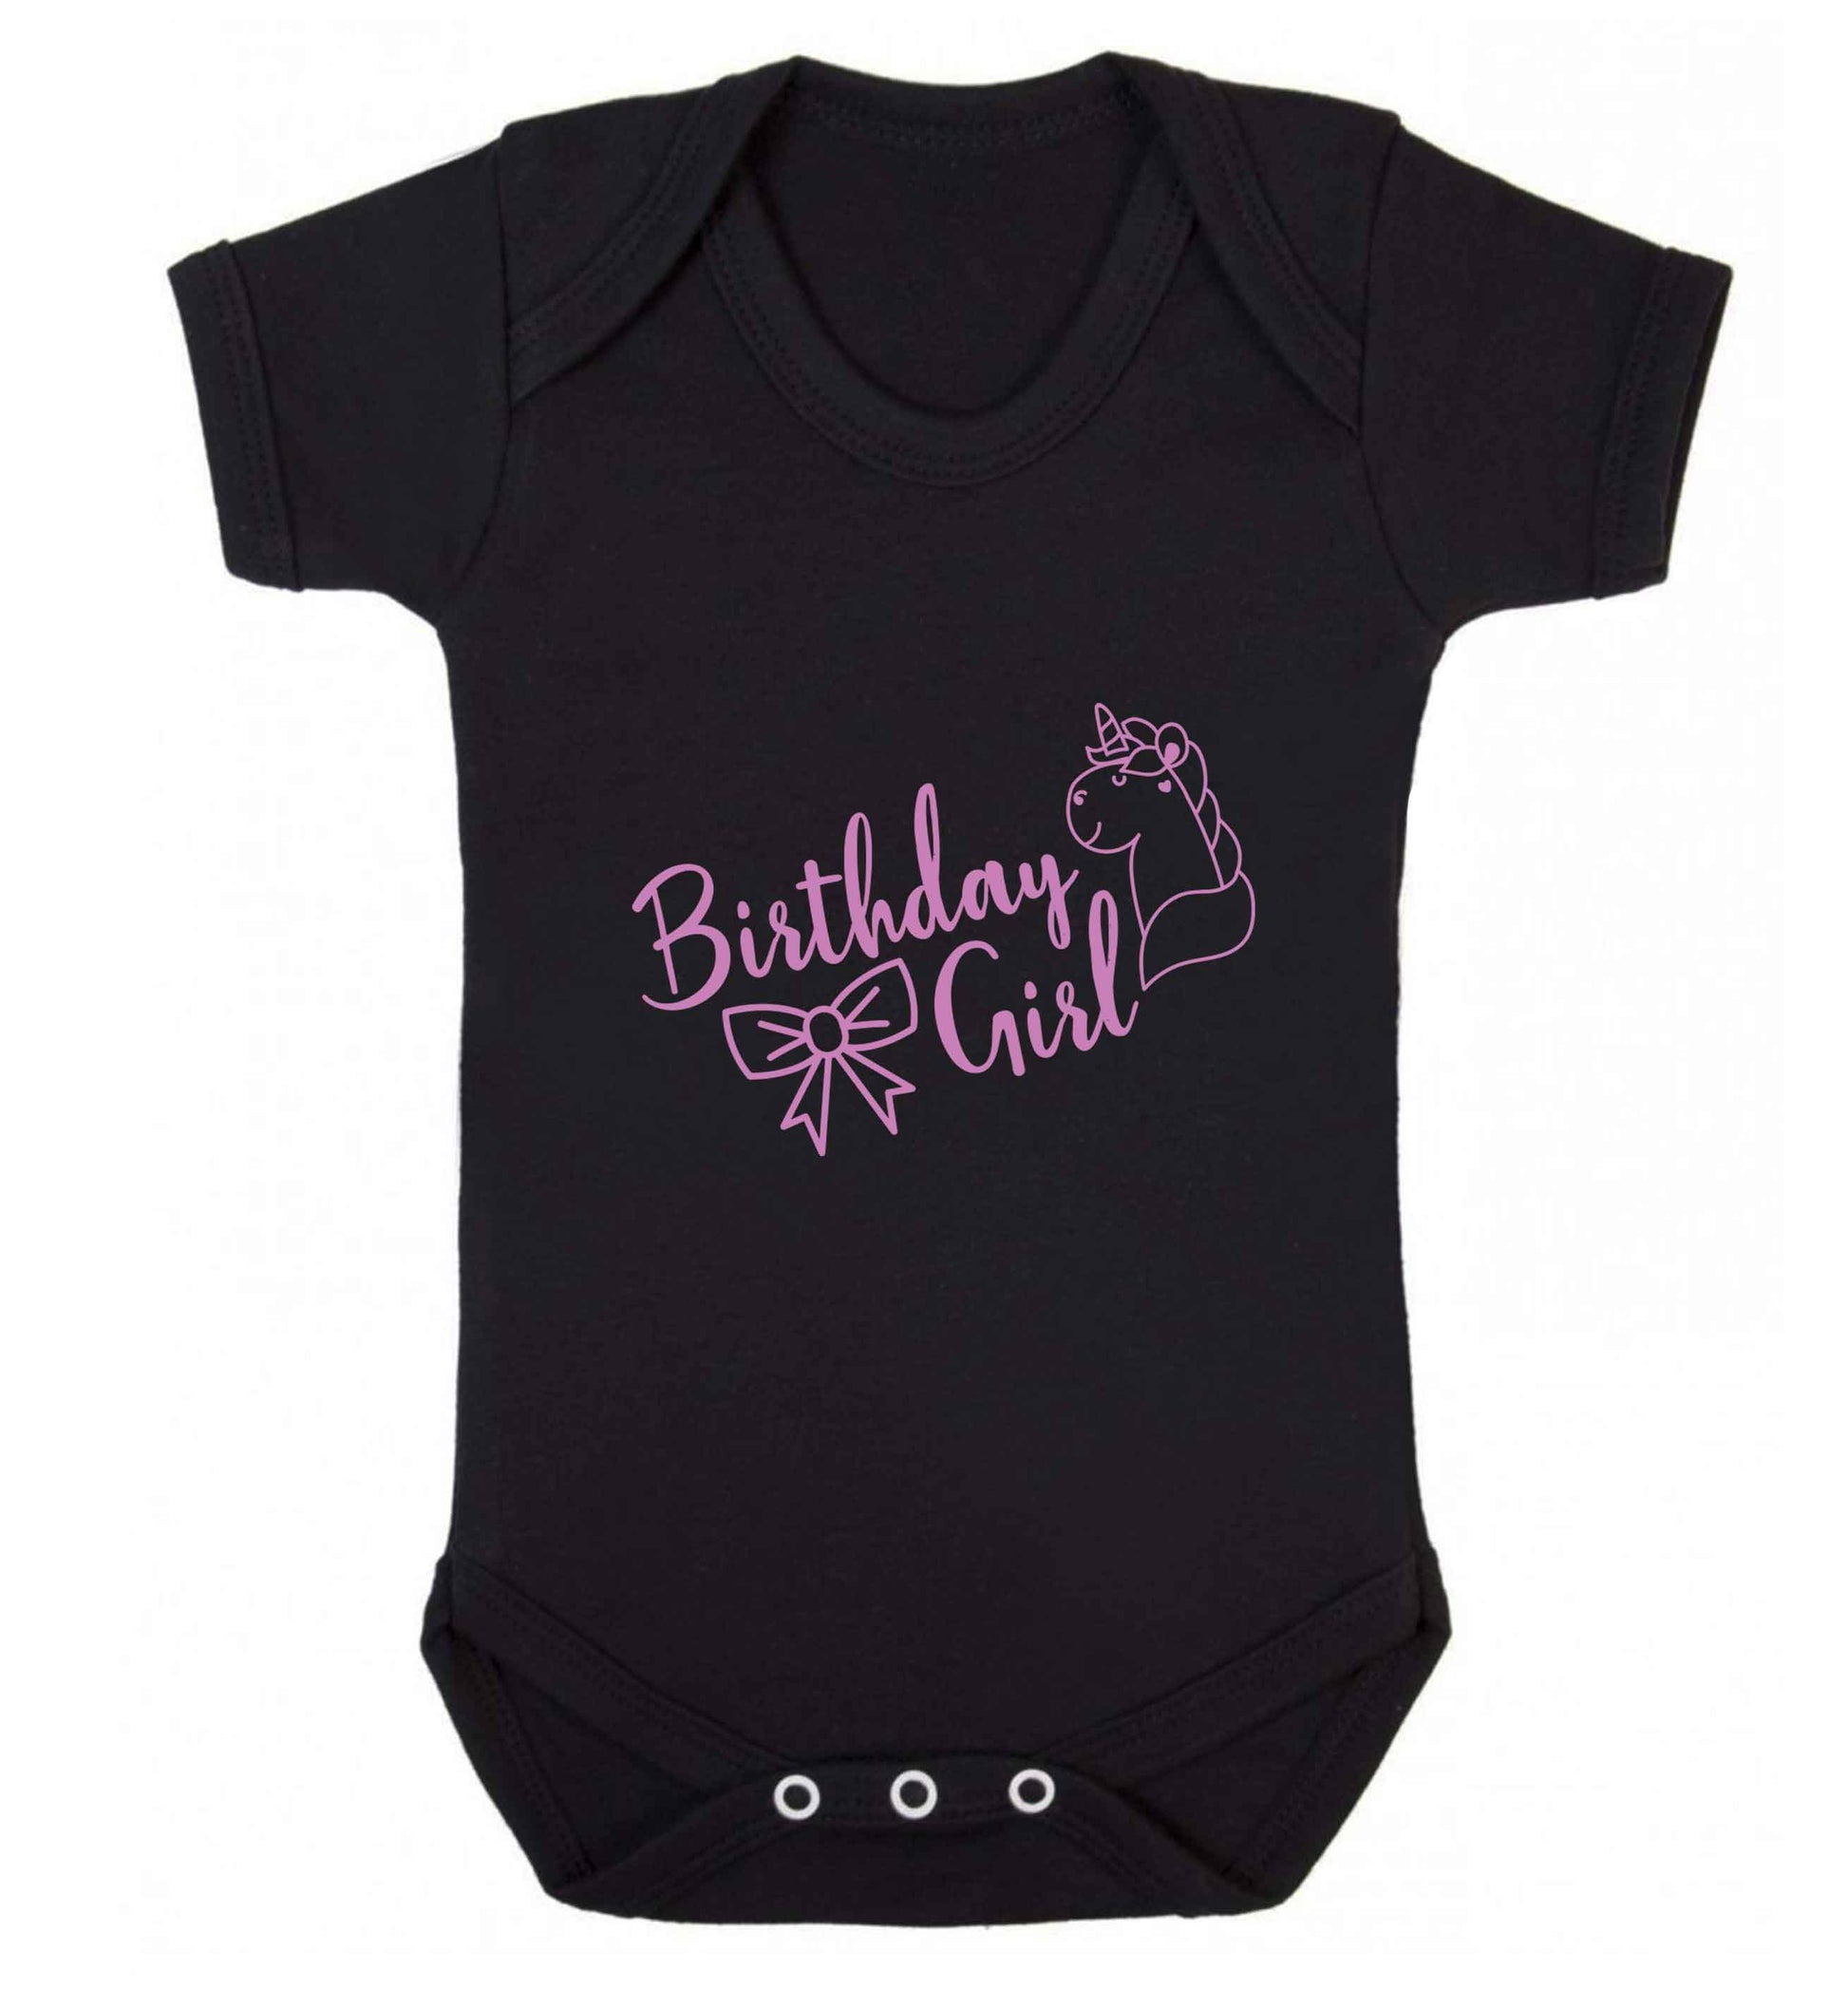 Birthday girl baby vest black 18-24 months